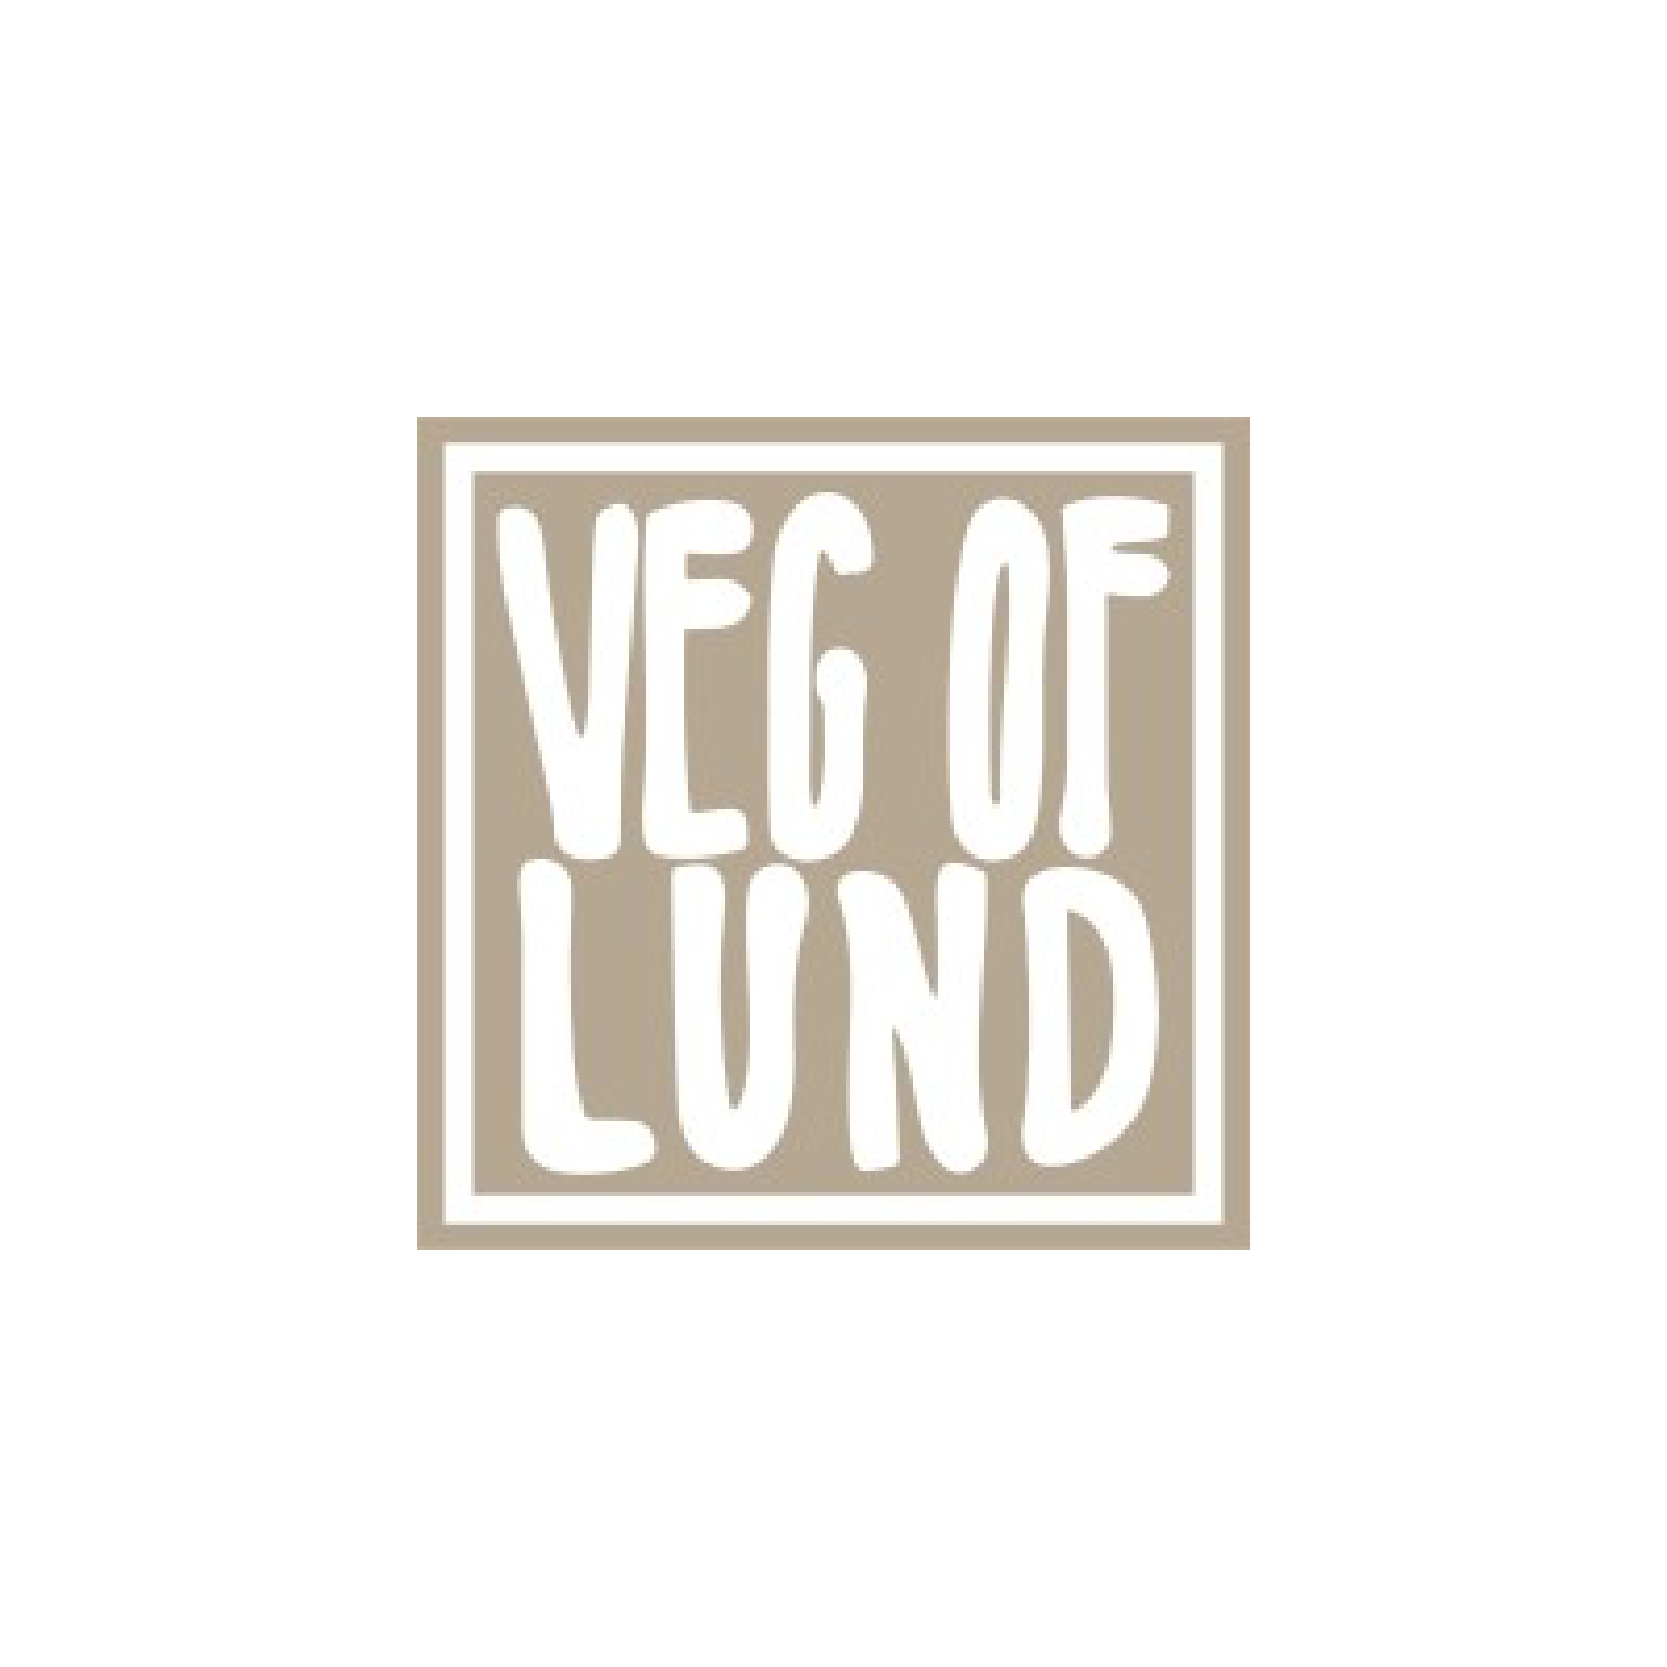 Veg of lund logo